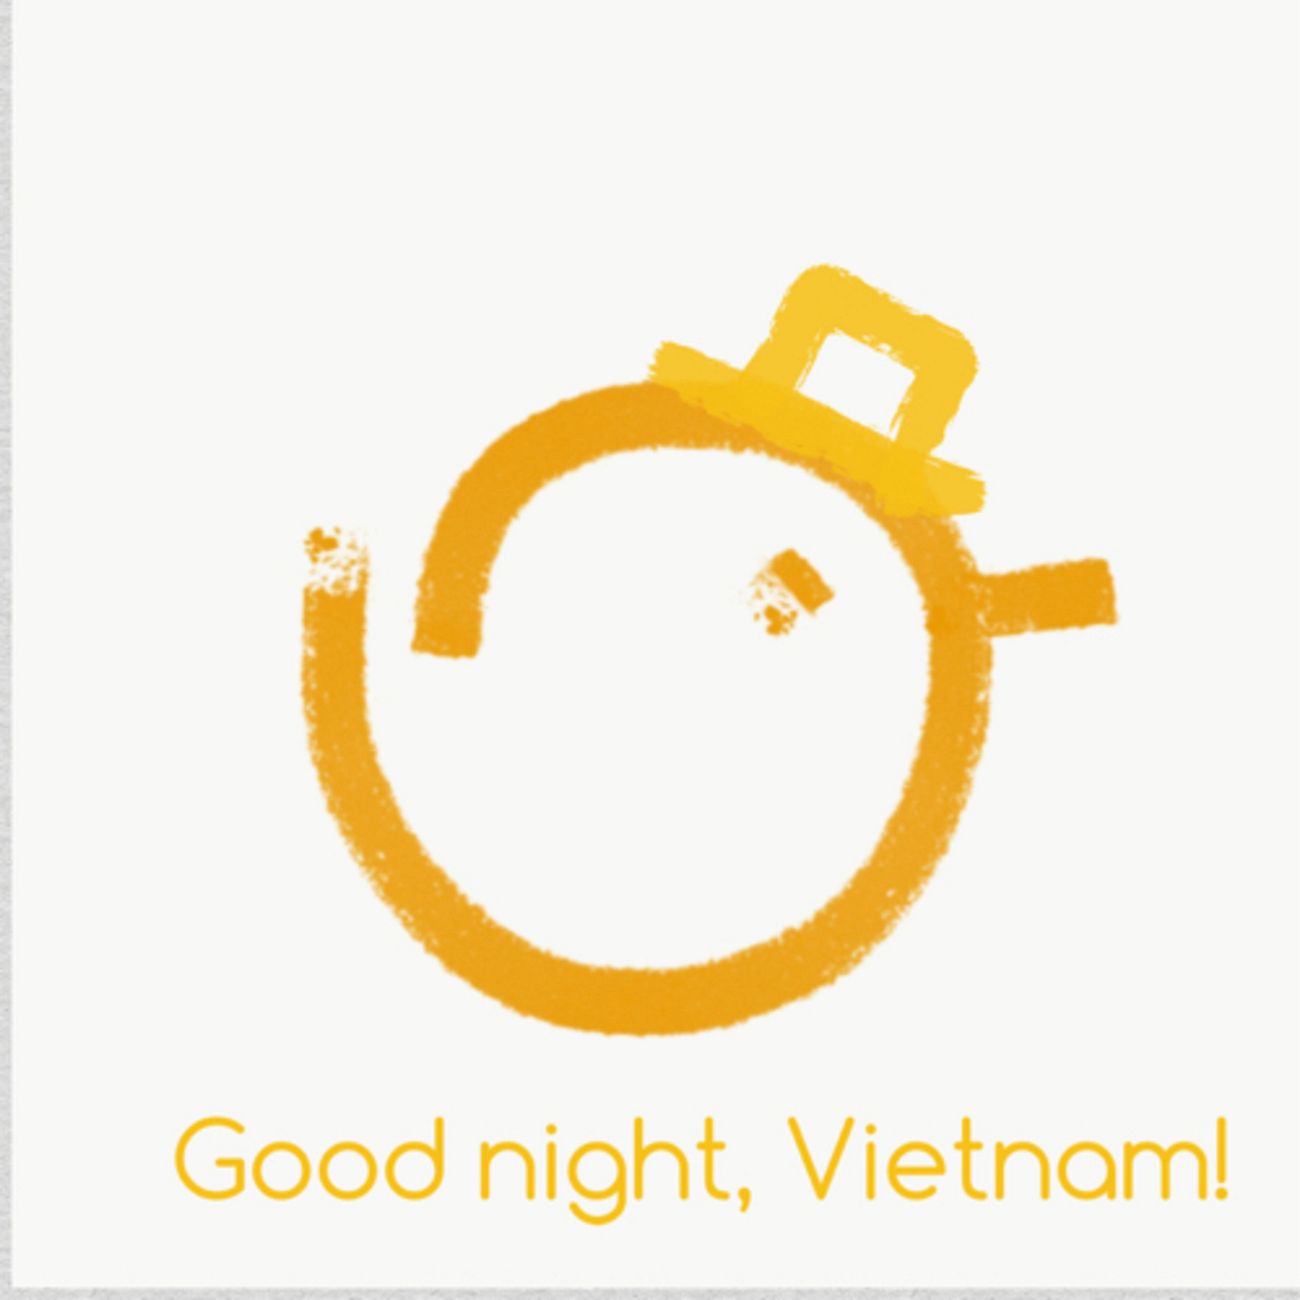 Доброй ночи, Вьетнам!